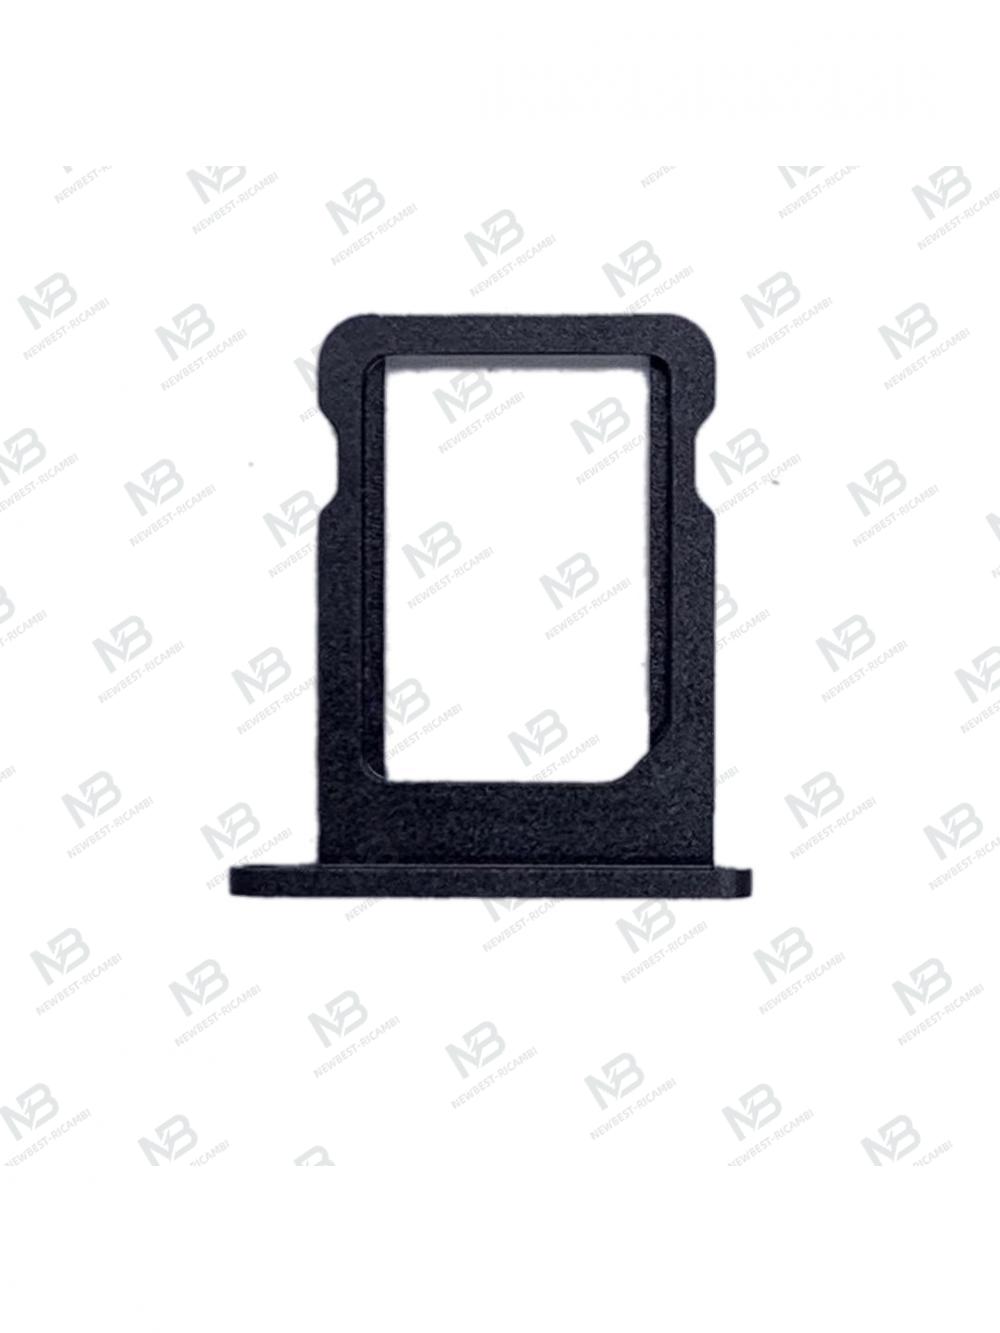 iPad pro 11'' 2018 sim tray black